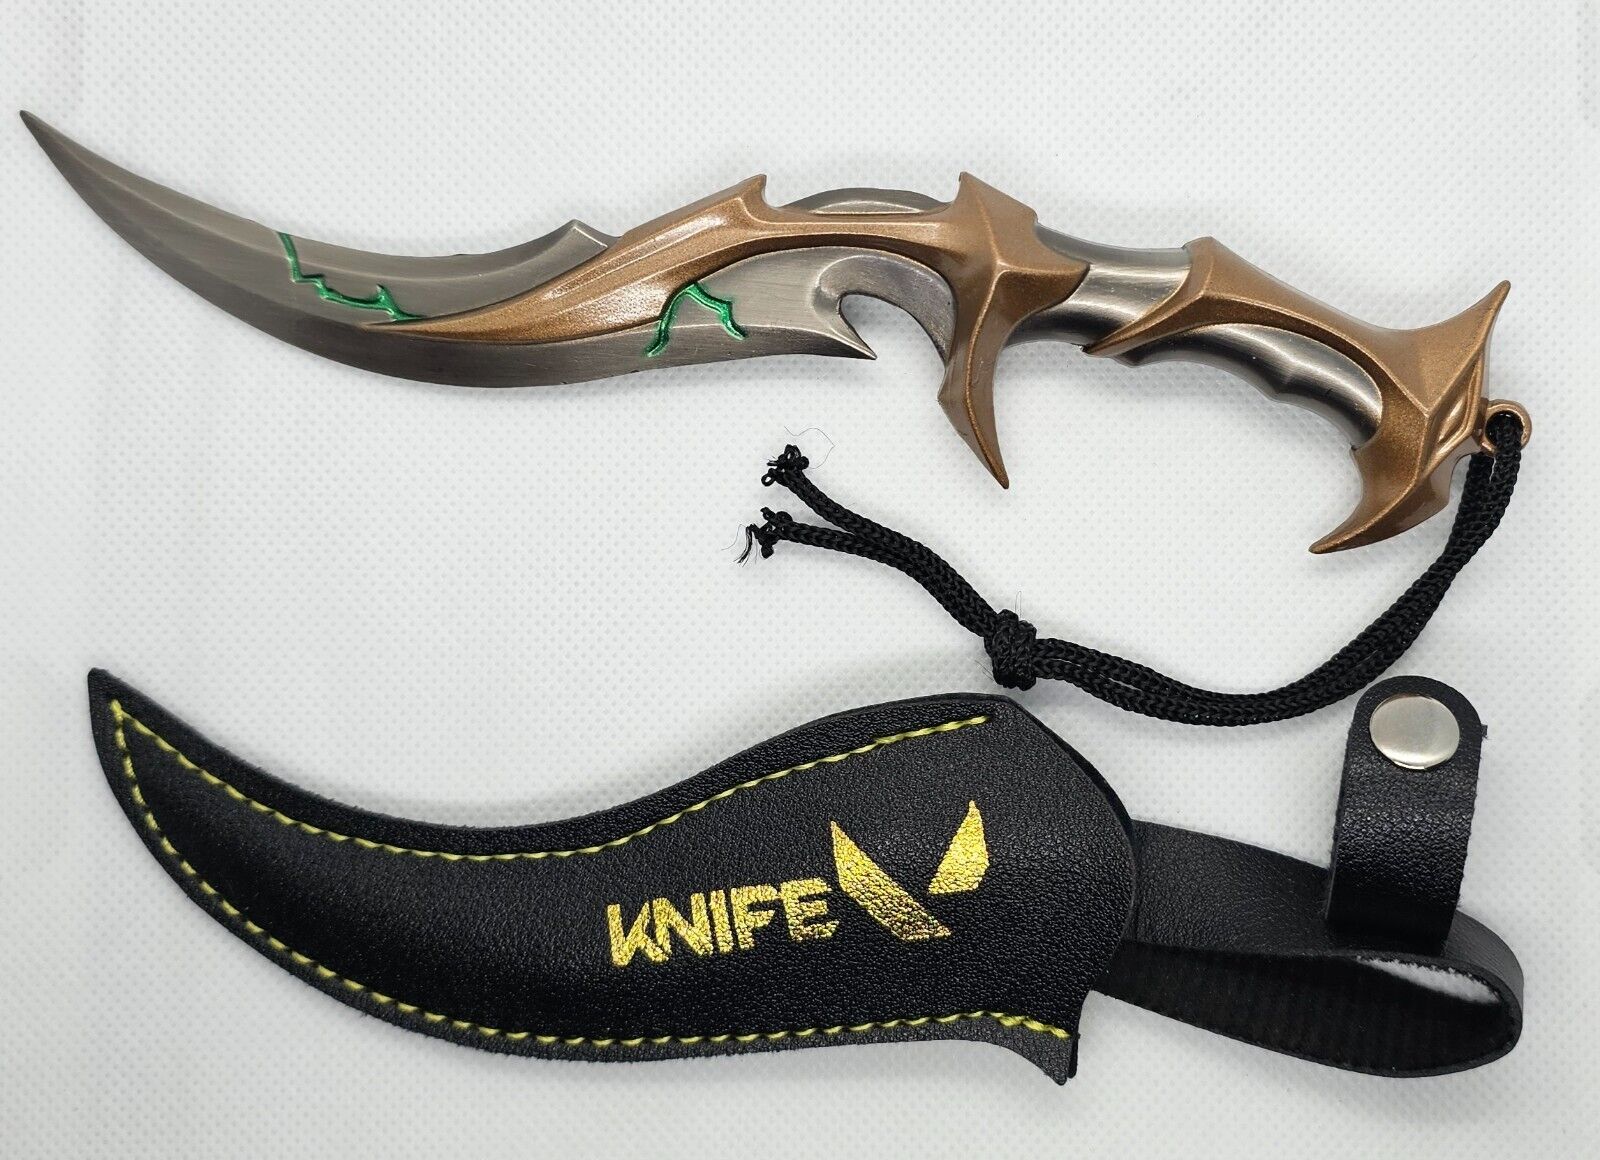 Game Valorant Knife Model Gift knife Toys,Valorant Weapons cutlass Models